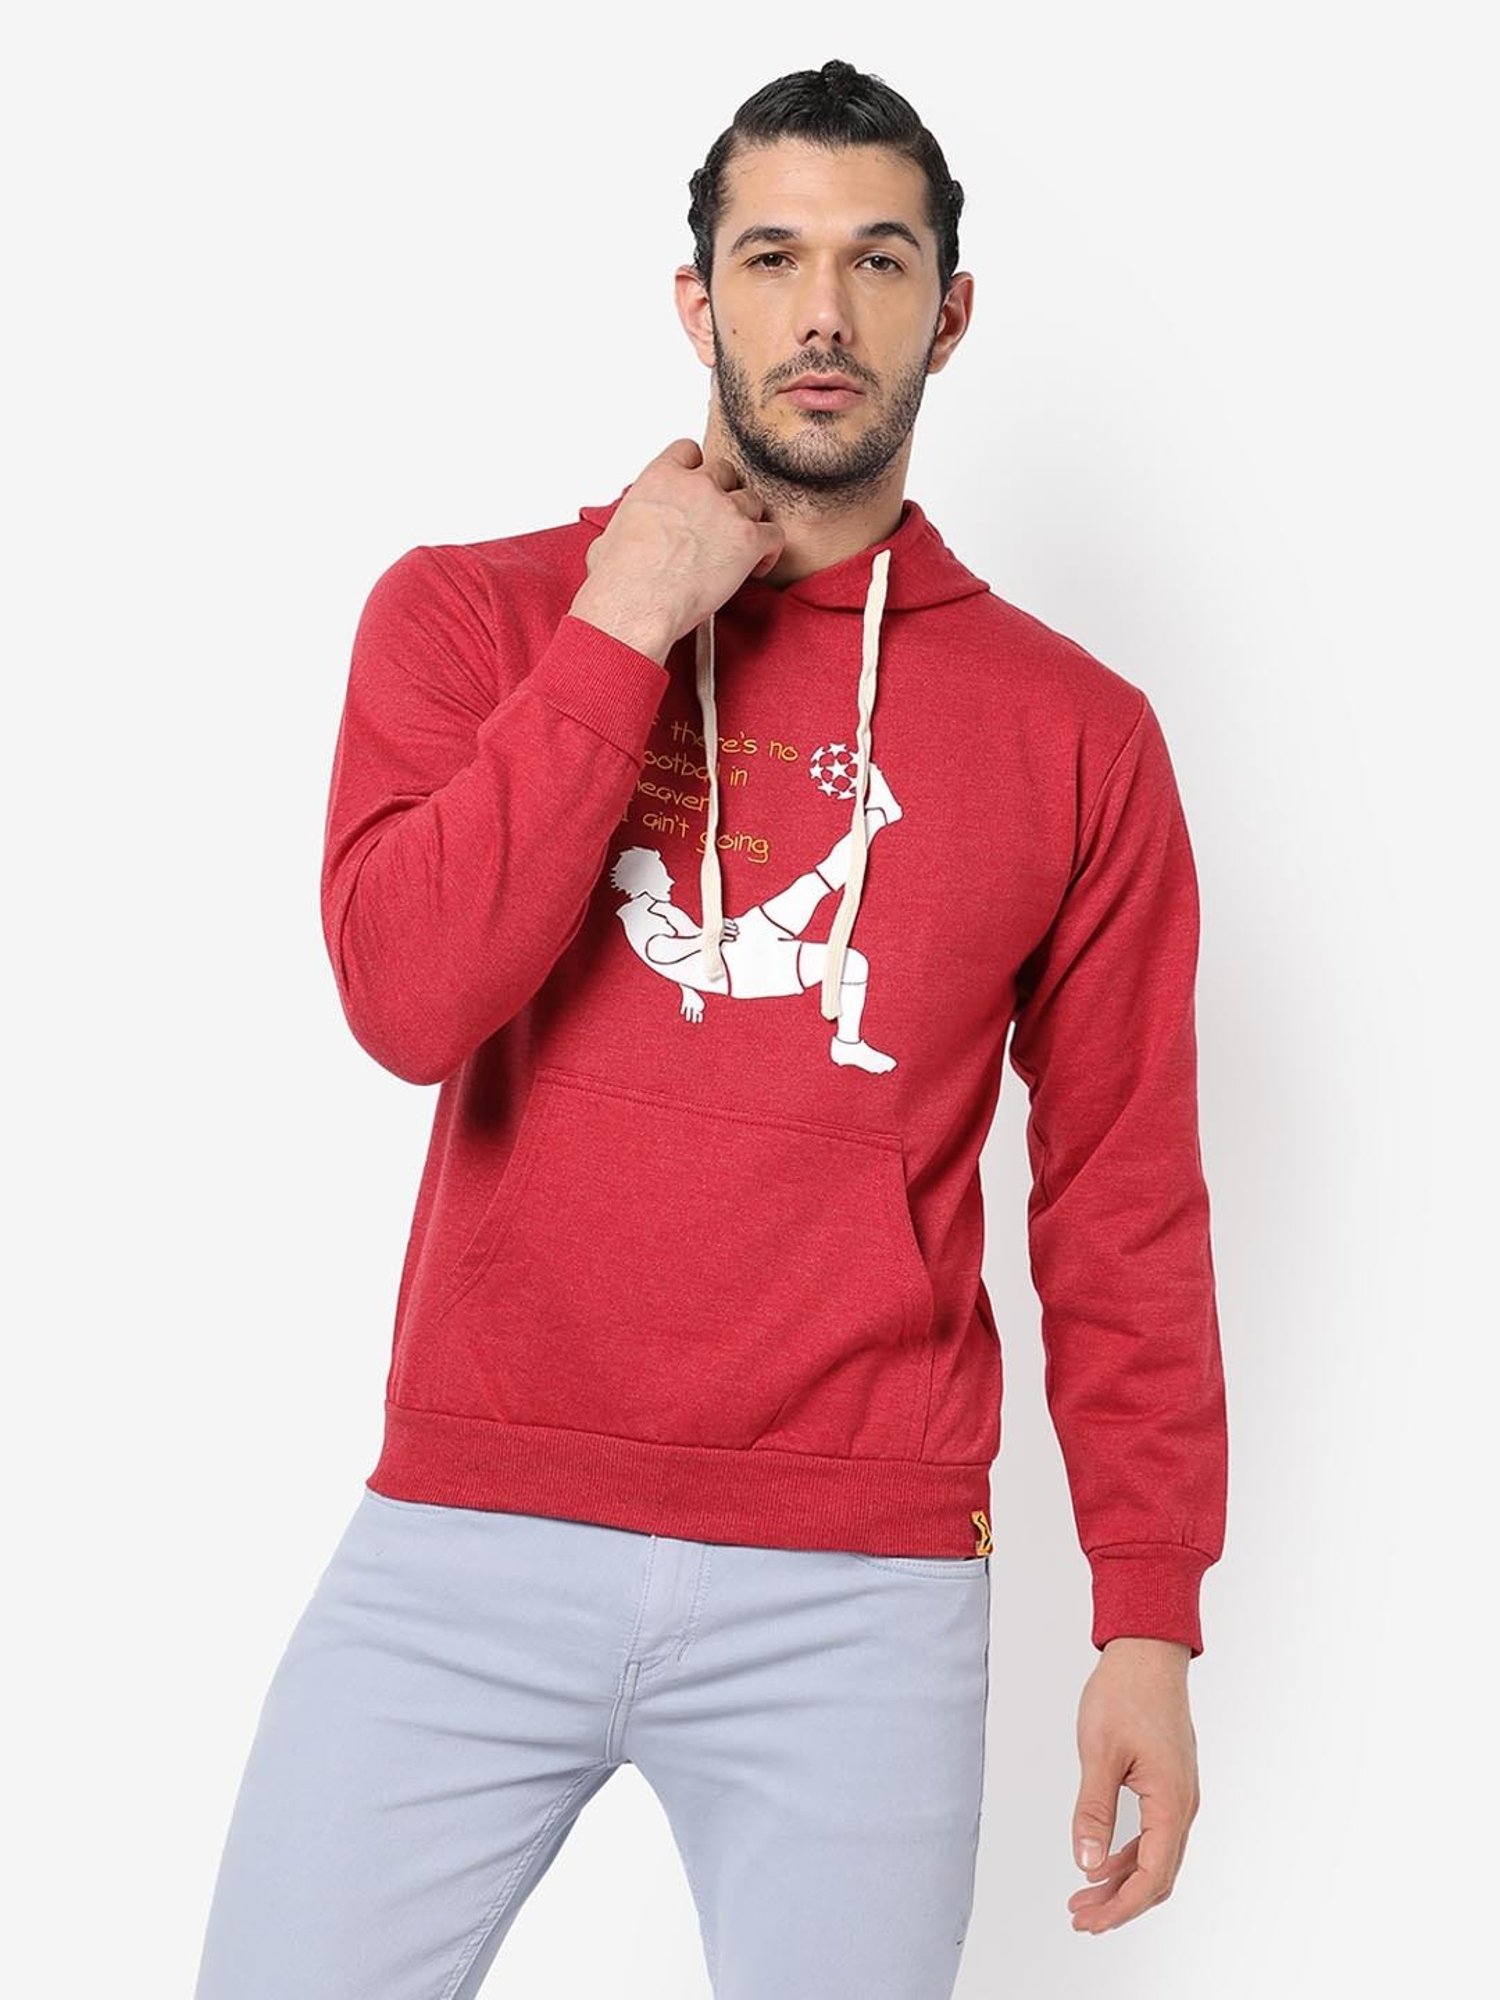 Buy CAMPUS SUTRA Maroon Printed Cotton Hooded Men's Sweatshirt